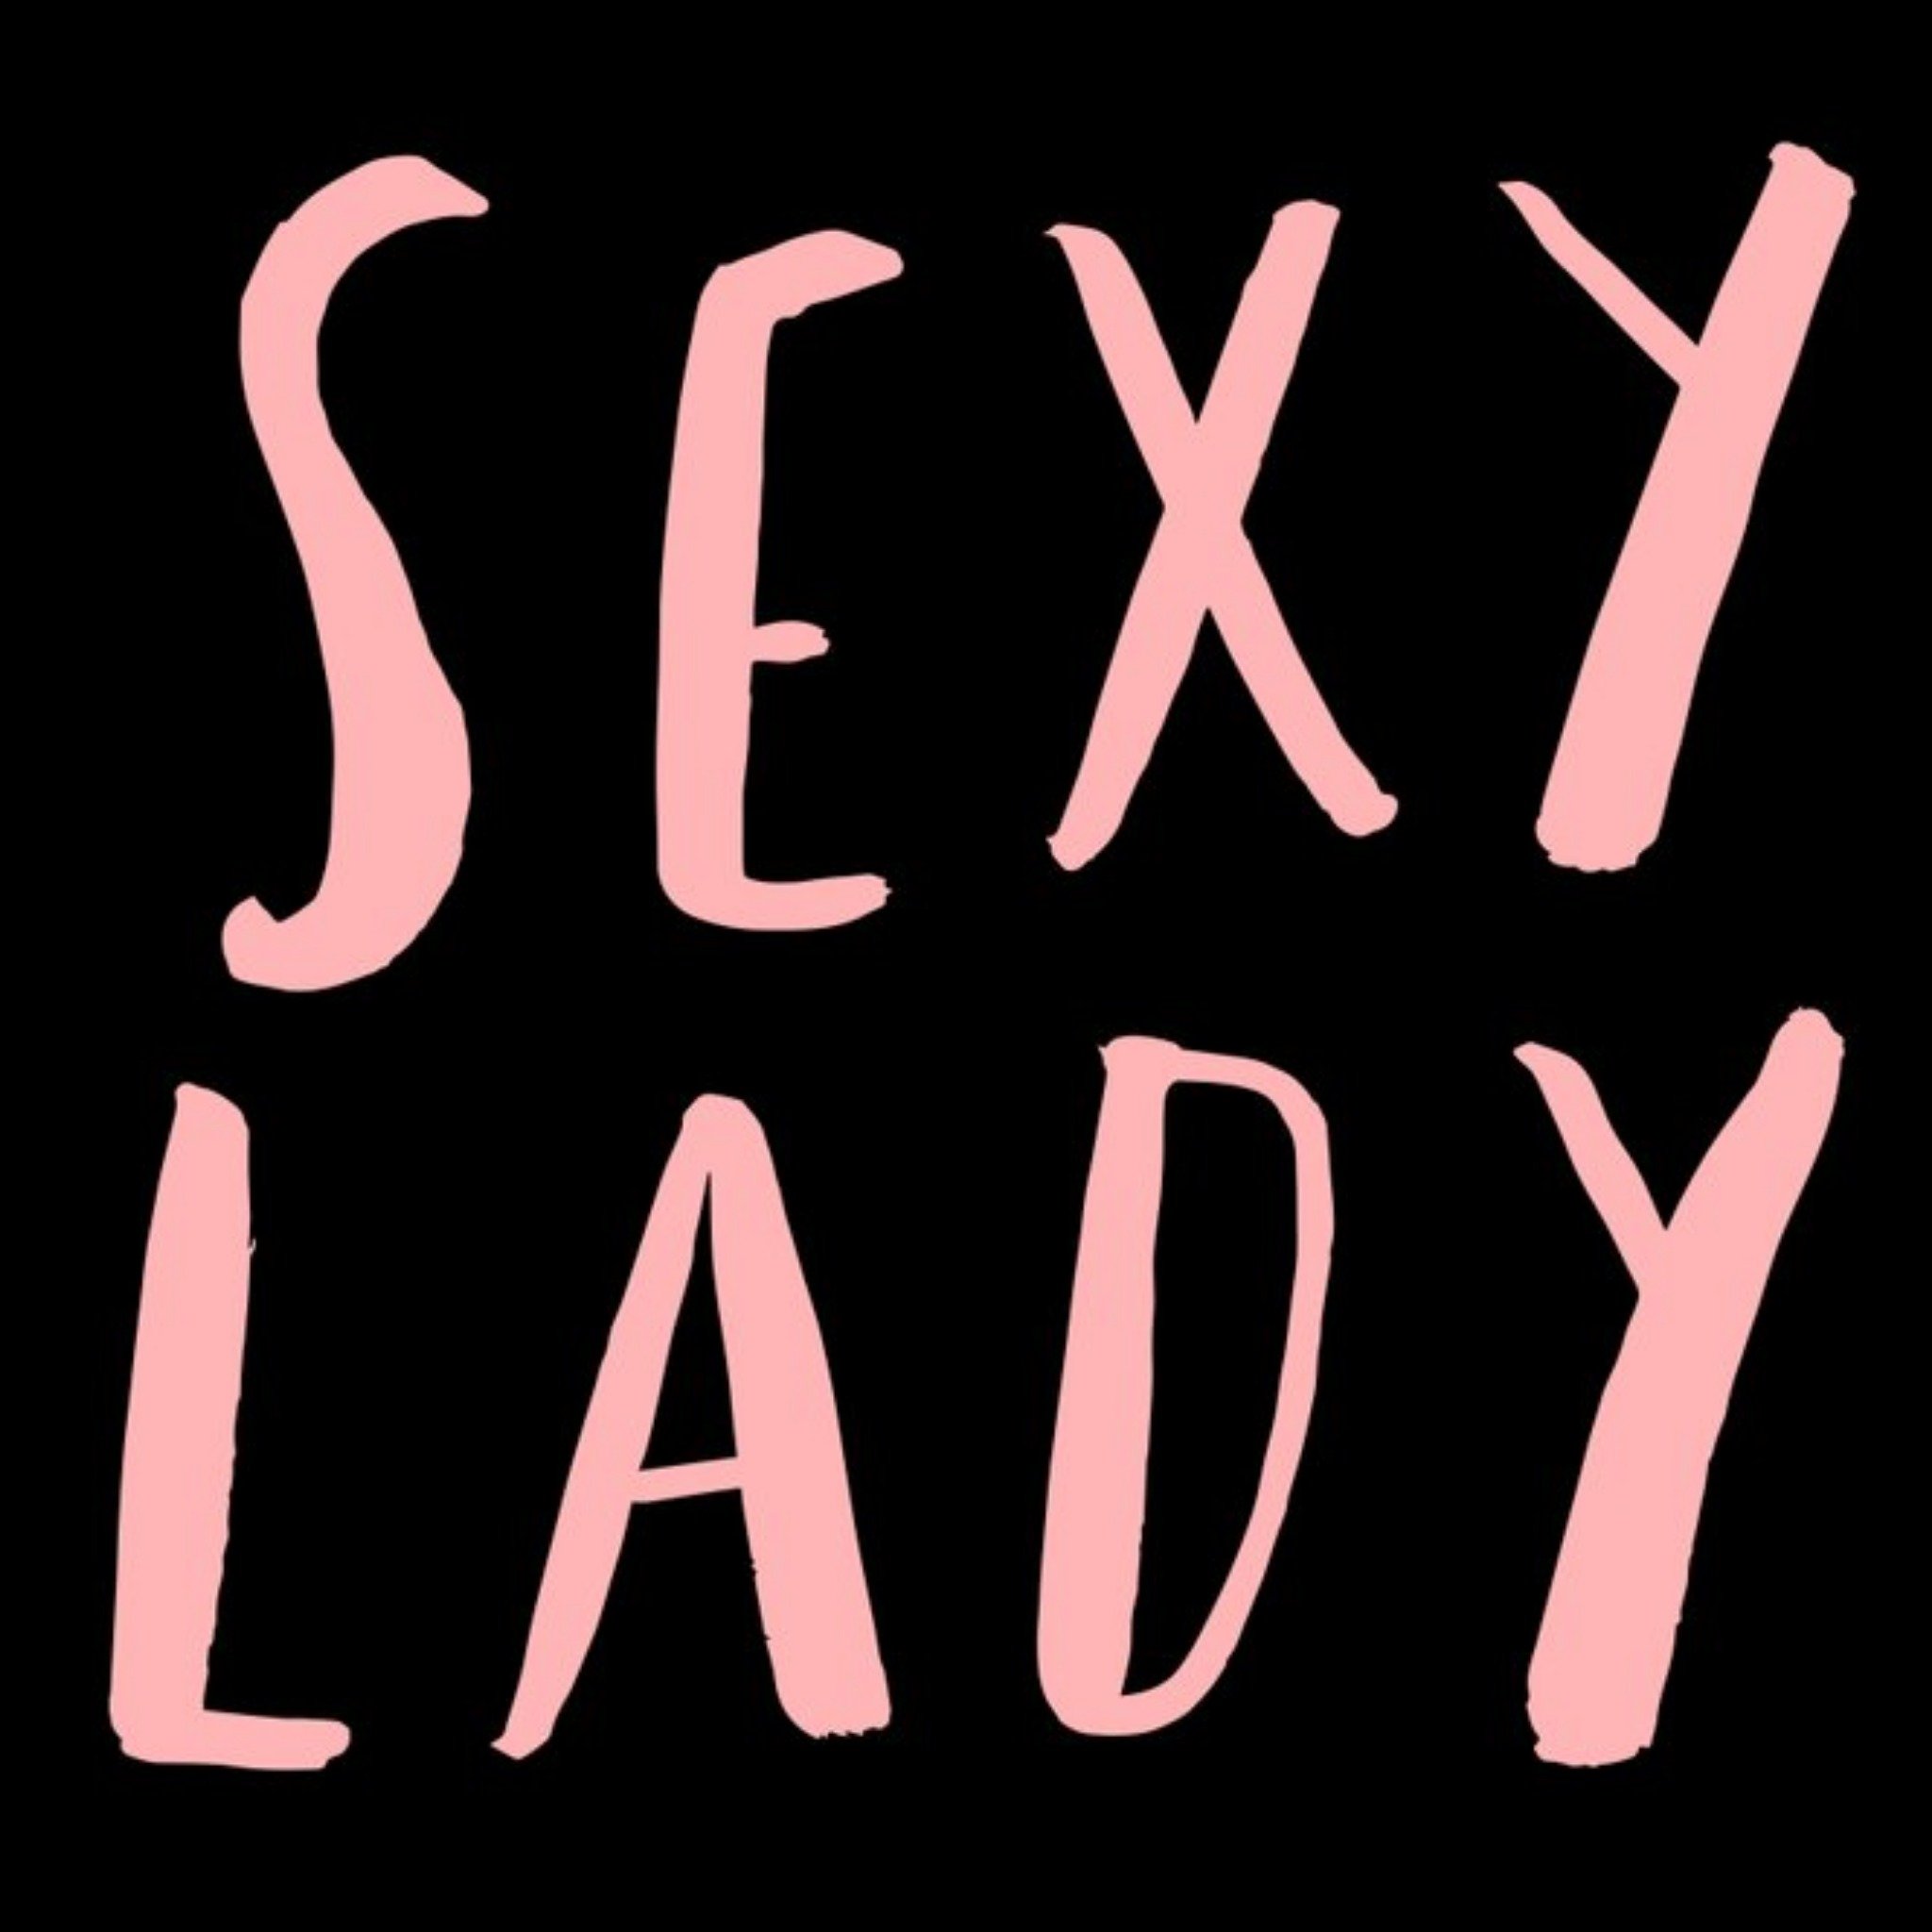 Moonpig Sexy Lady Square Card